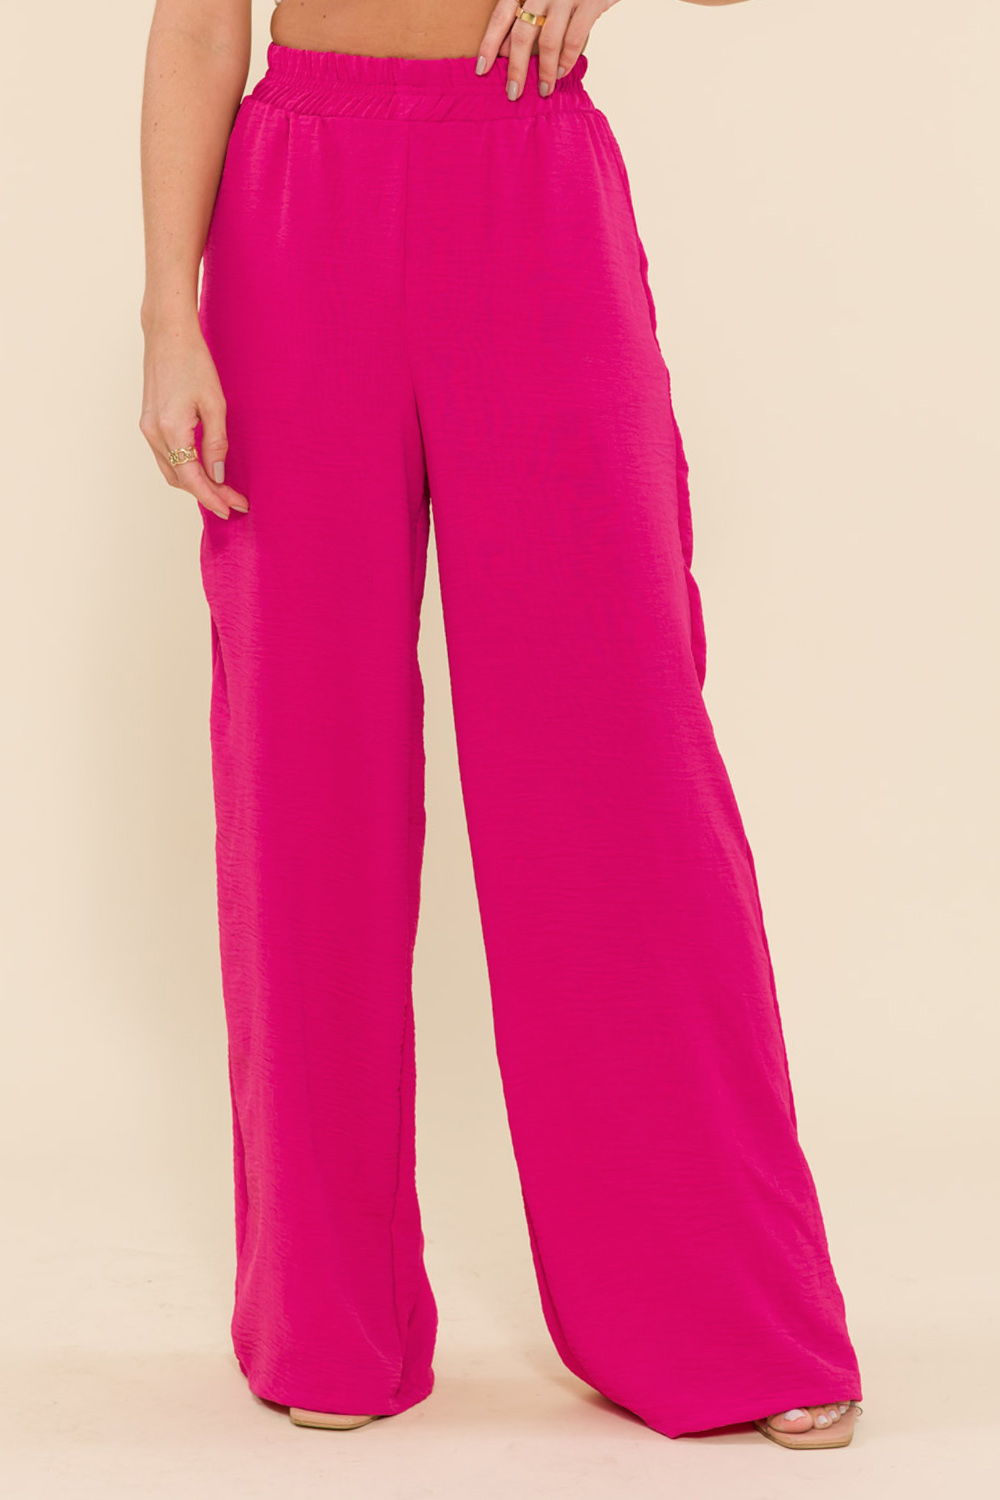 Calça Pantalona Jolie - Rosa Pink